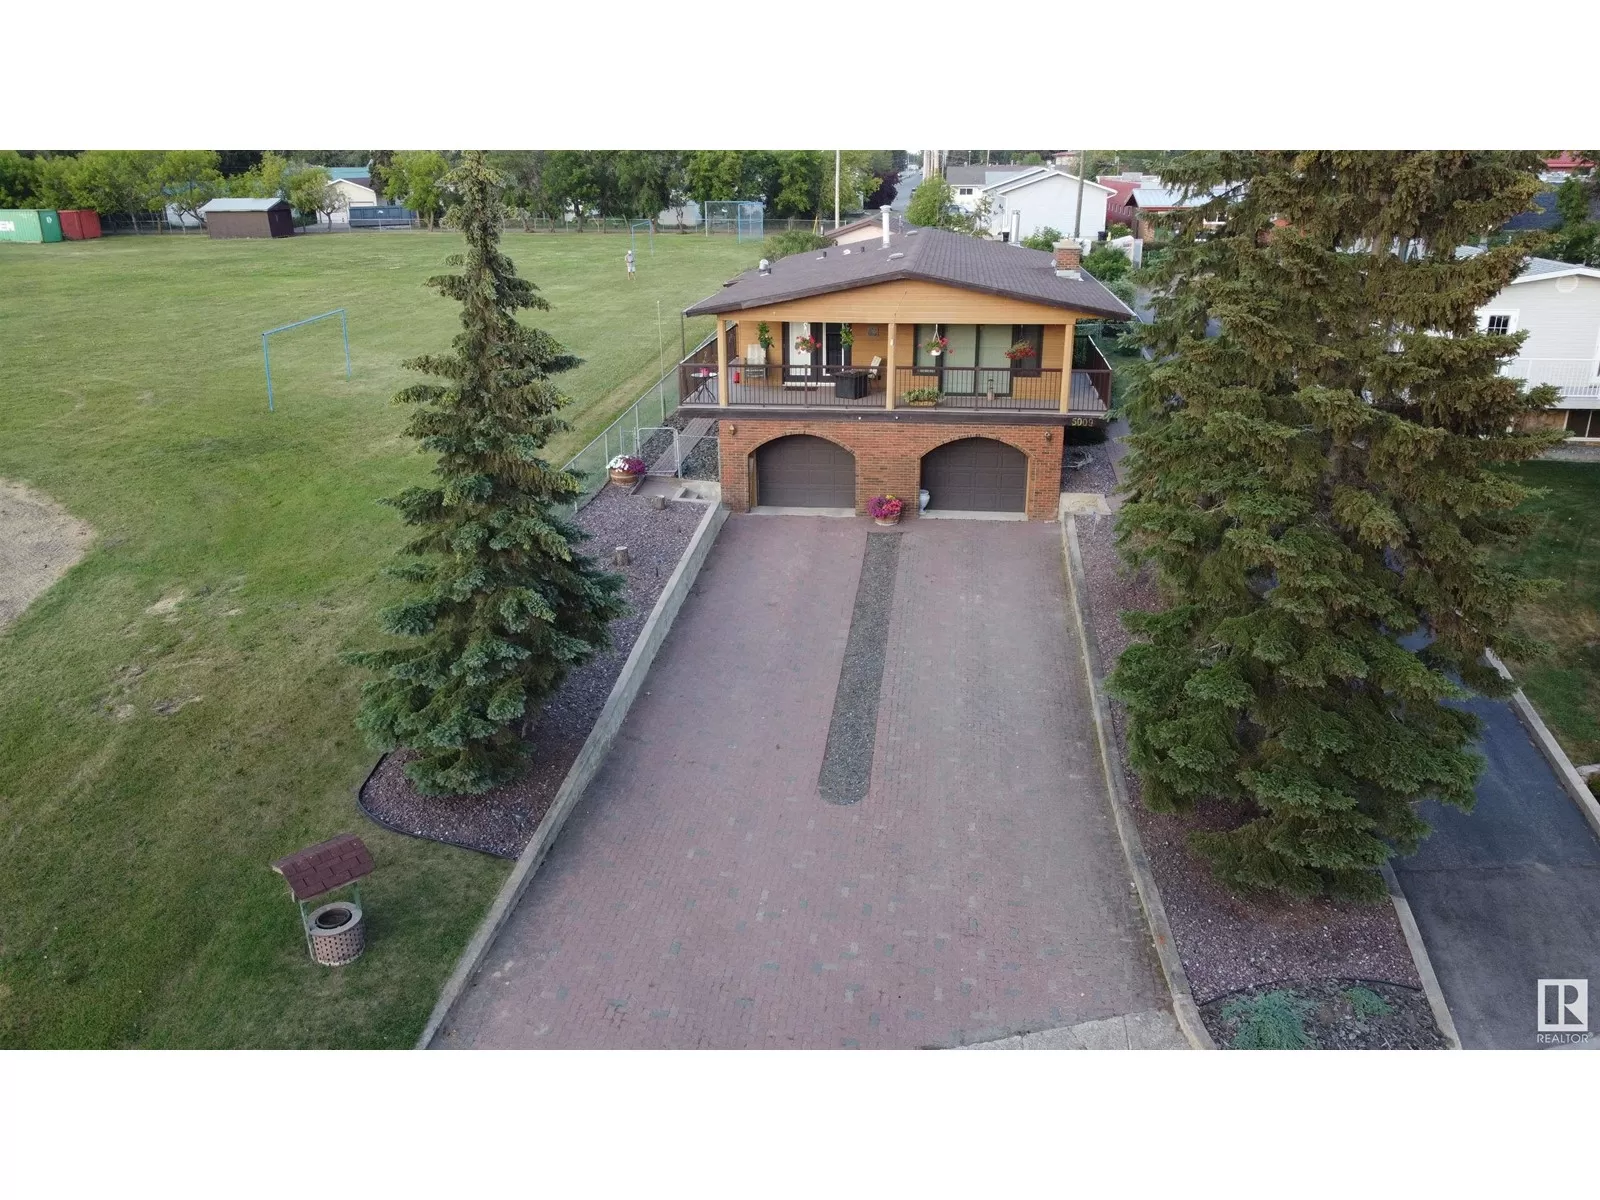 House for rent: 5009 Lakeshore Dr, Bonnyville Town, Alberta T9N 2G9